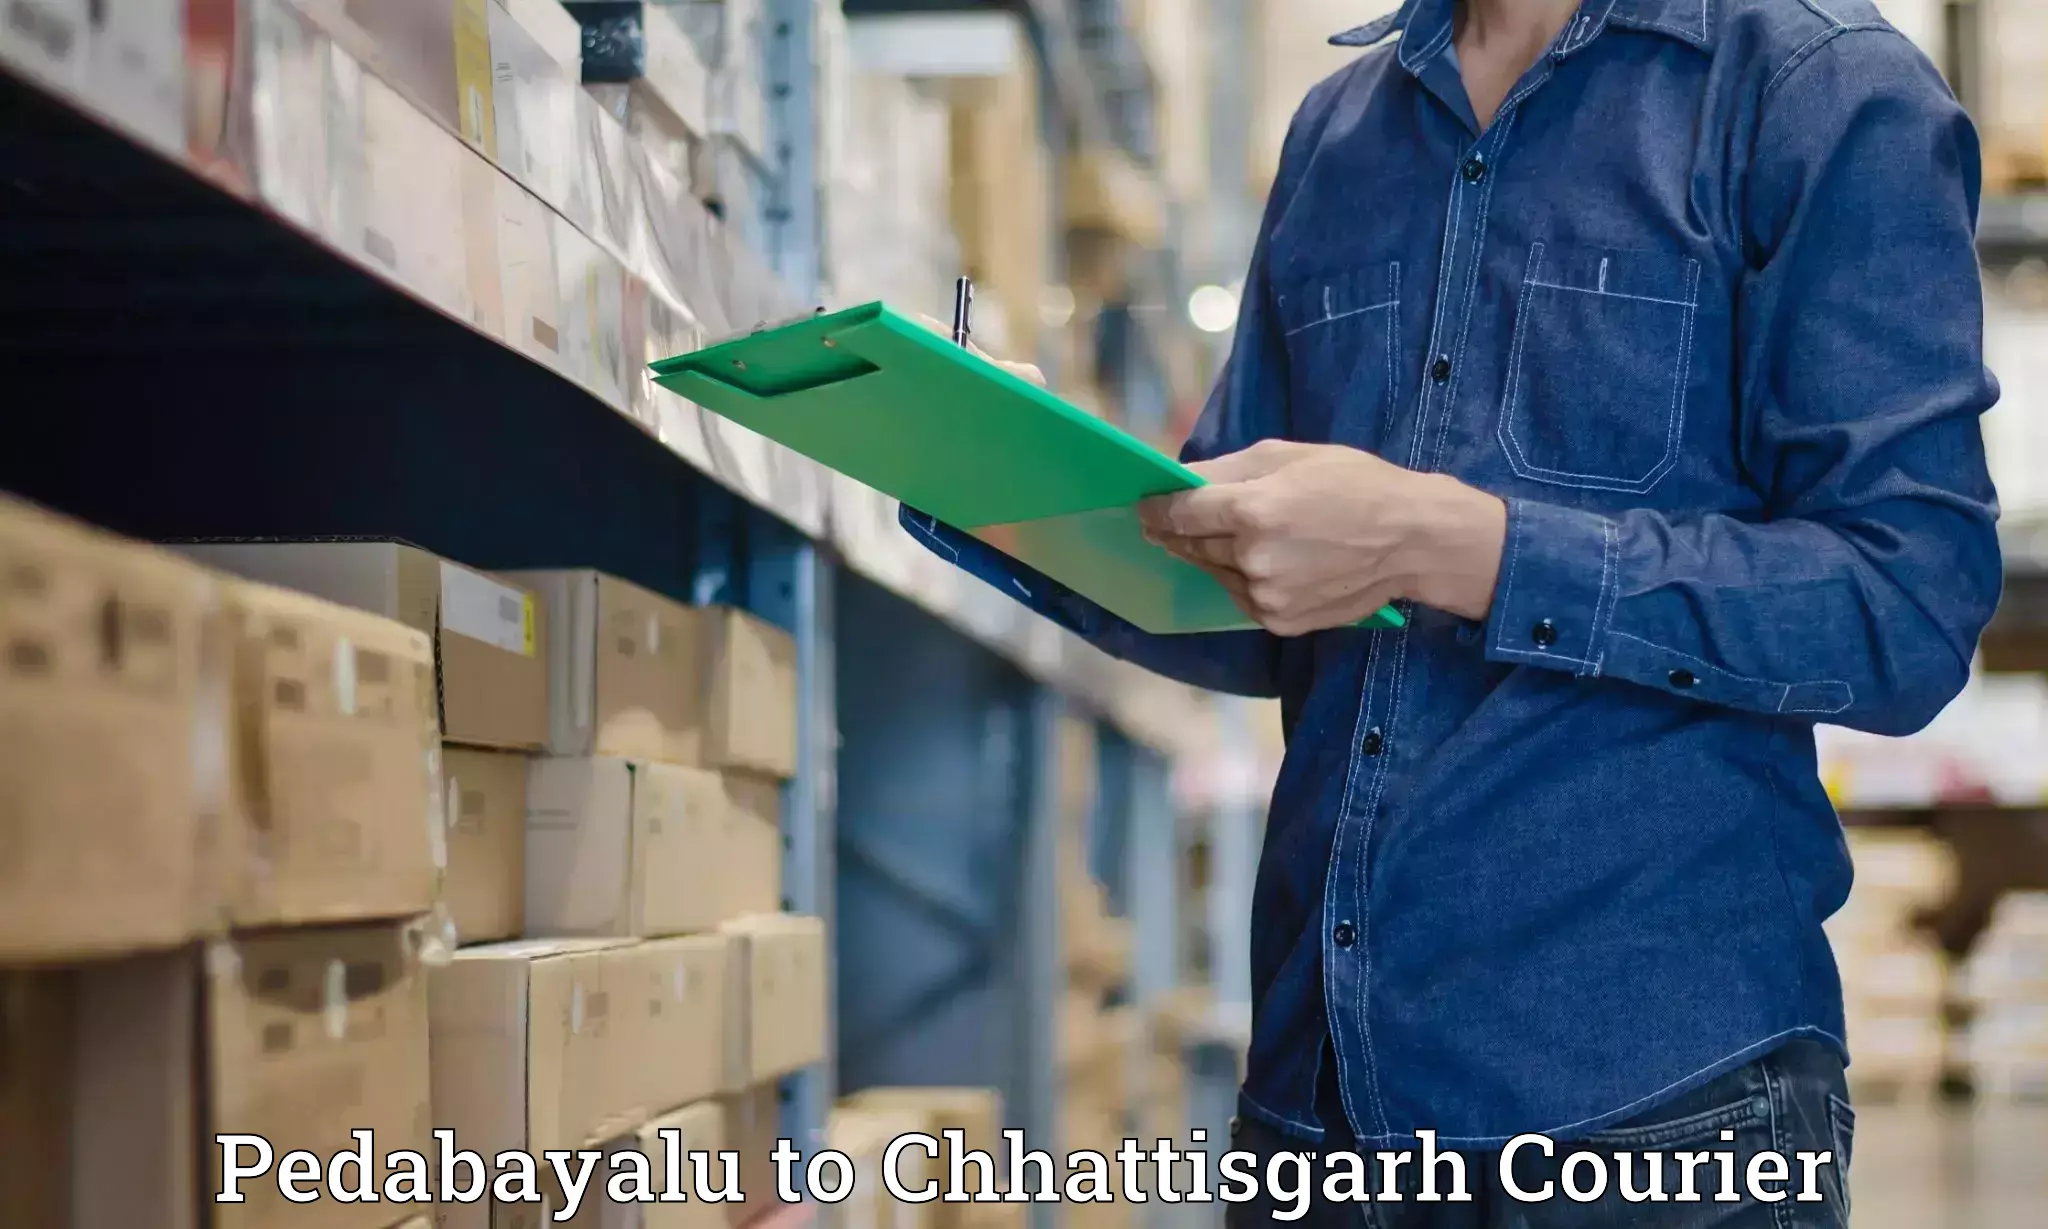 Professional courier handling Pedabayalu to Dabhra